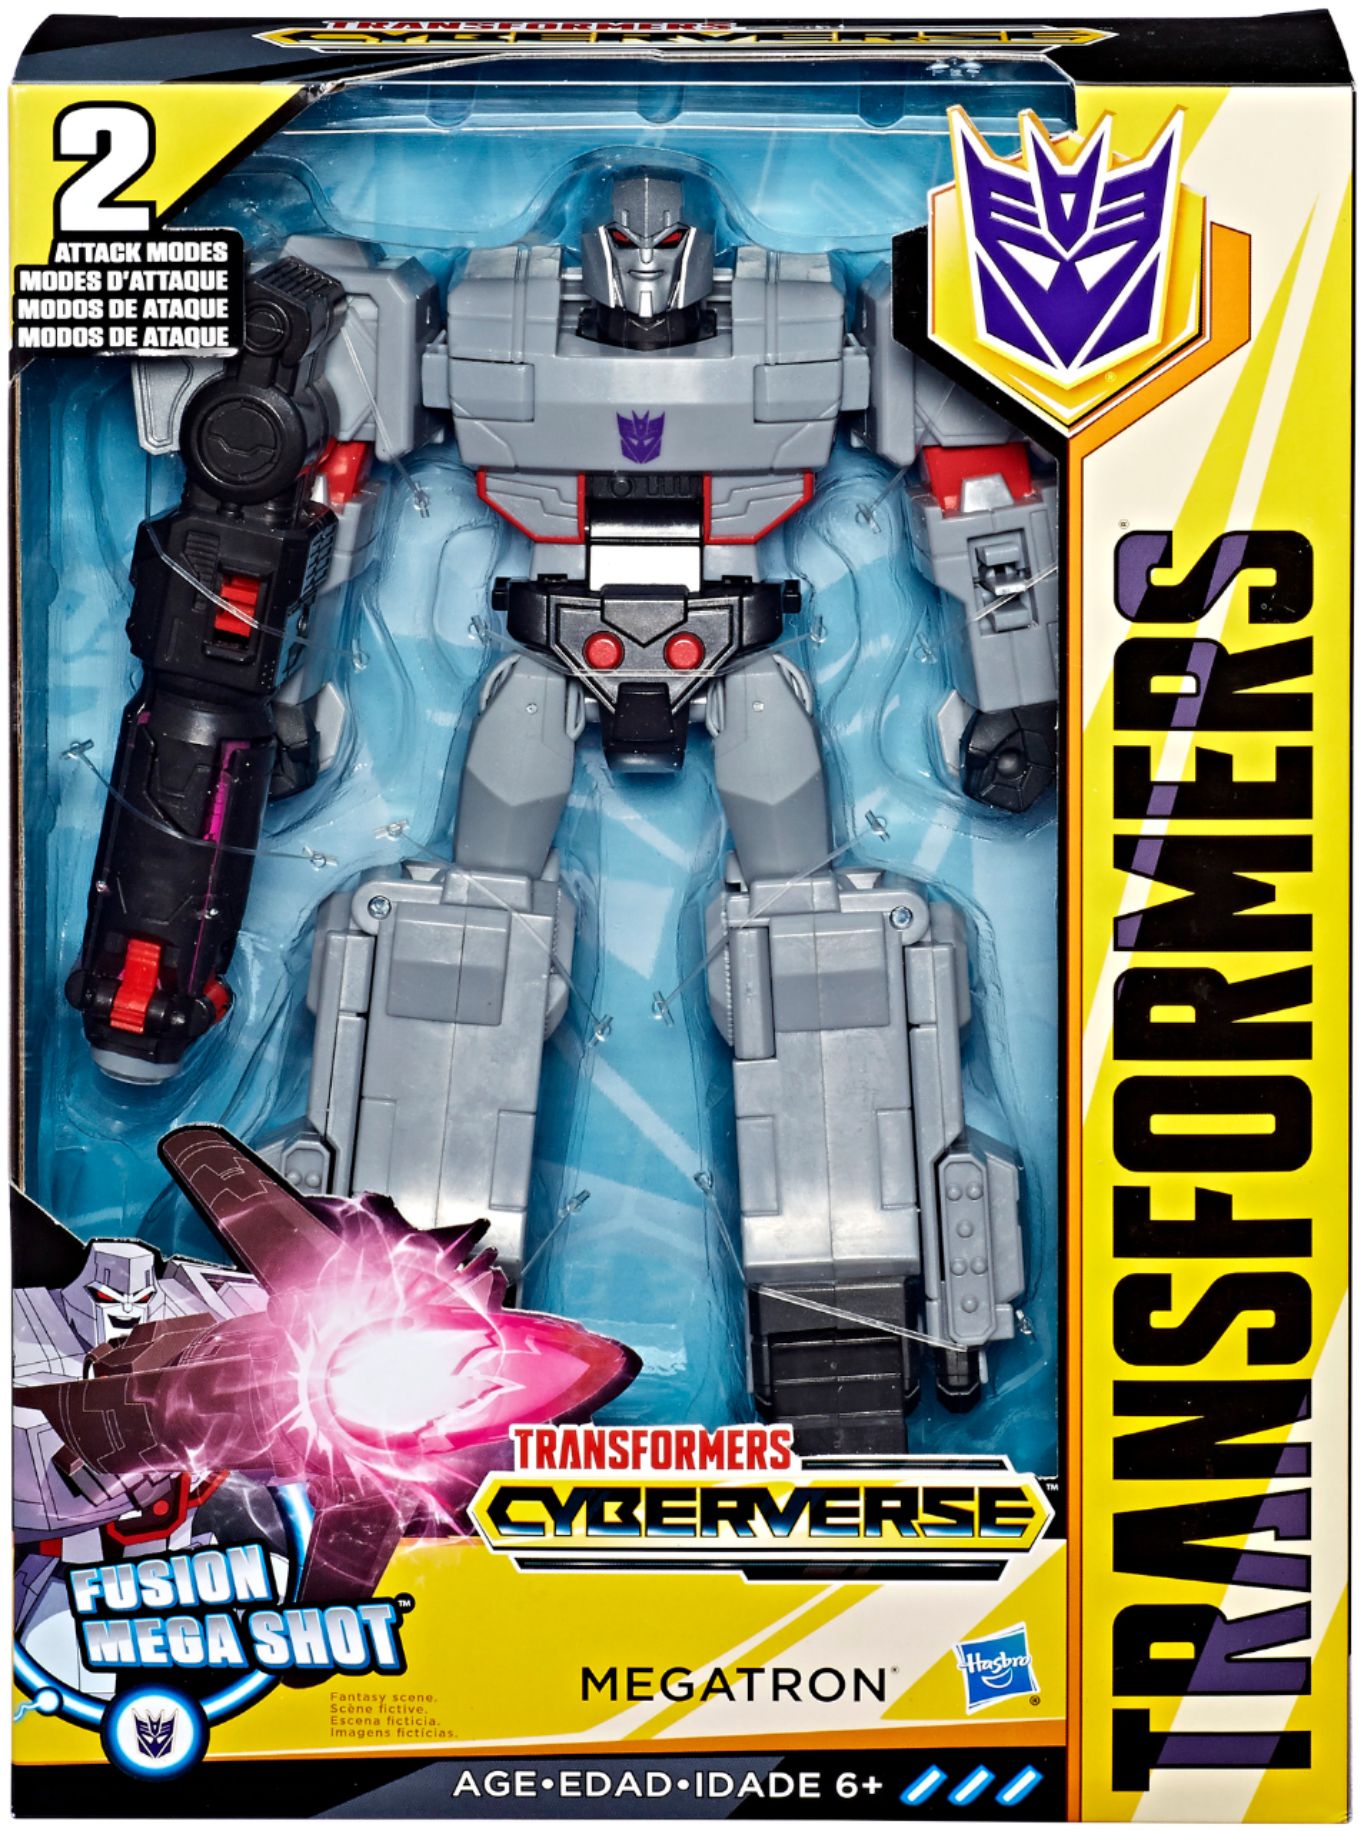 transformers toys optimus prime cyberverse ultimate class figure